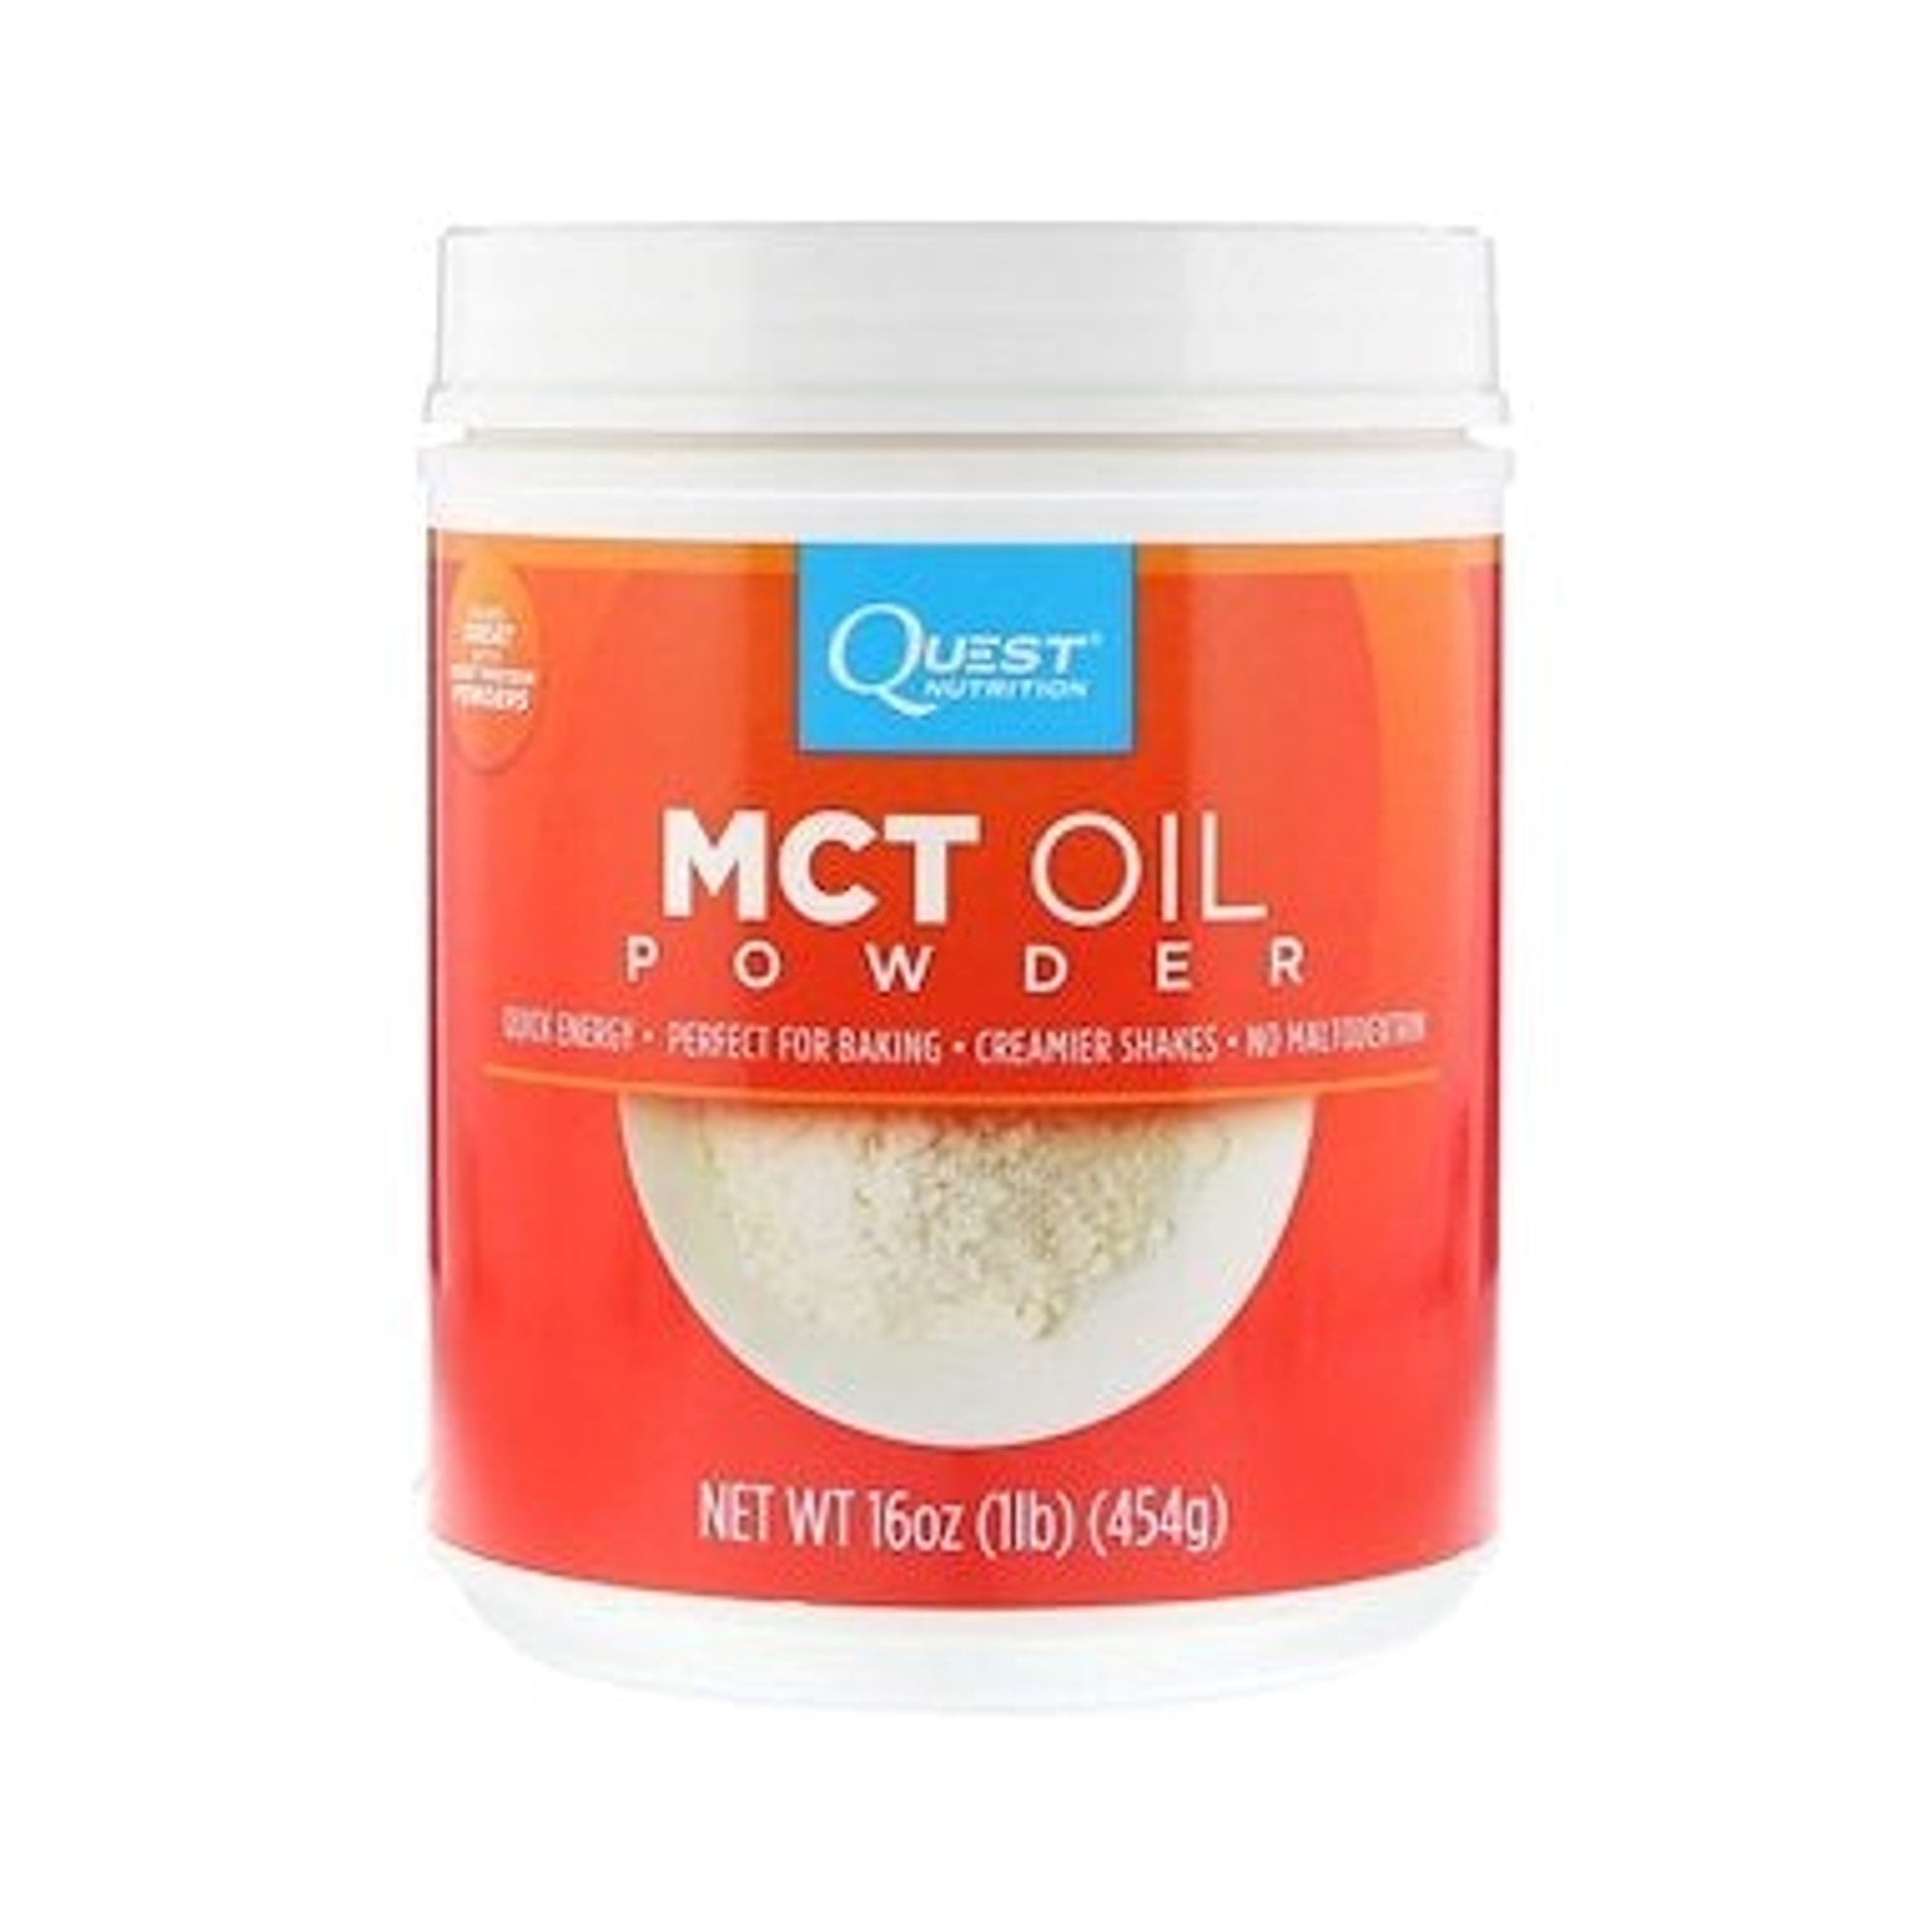 Quest MCT Powder